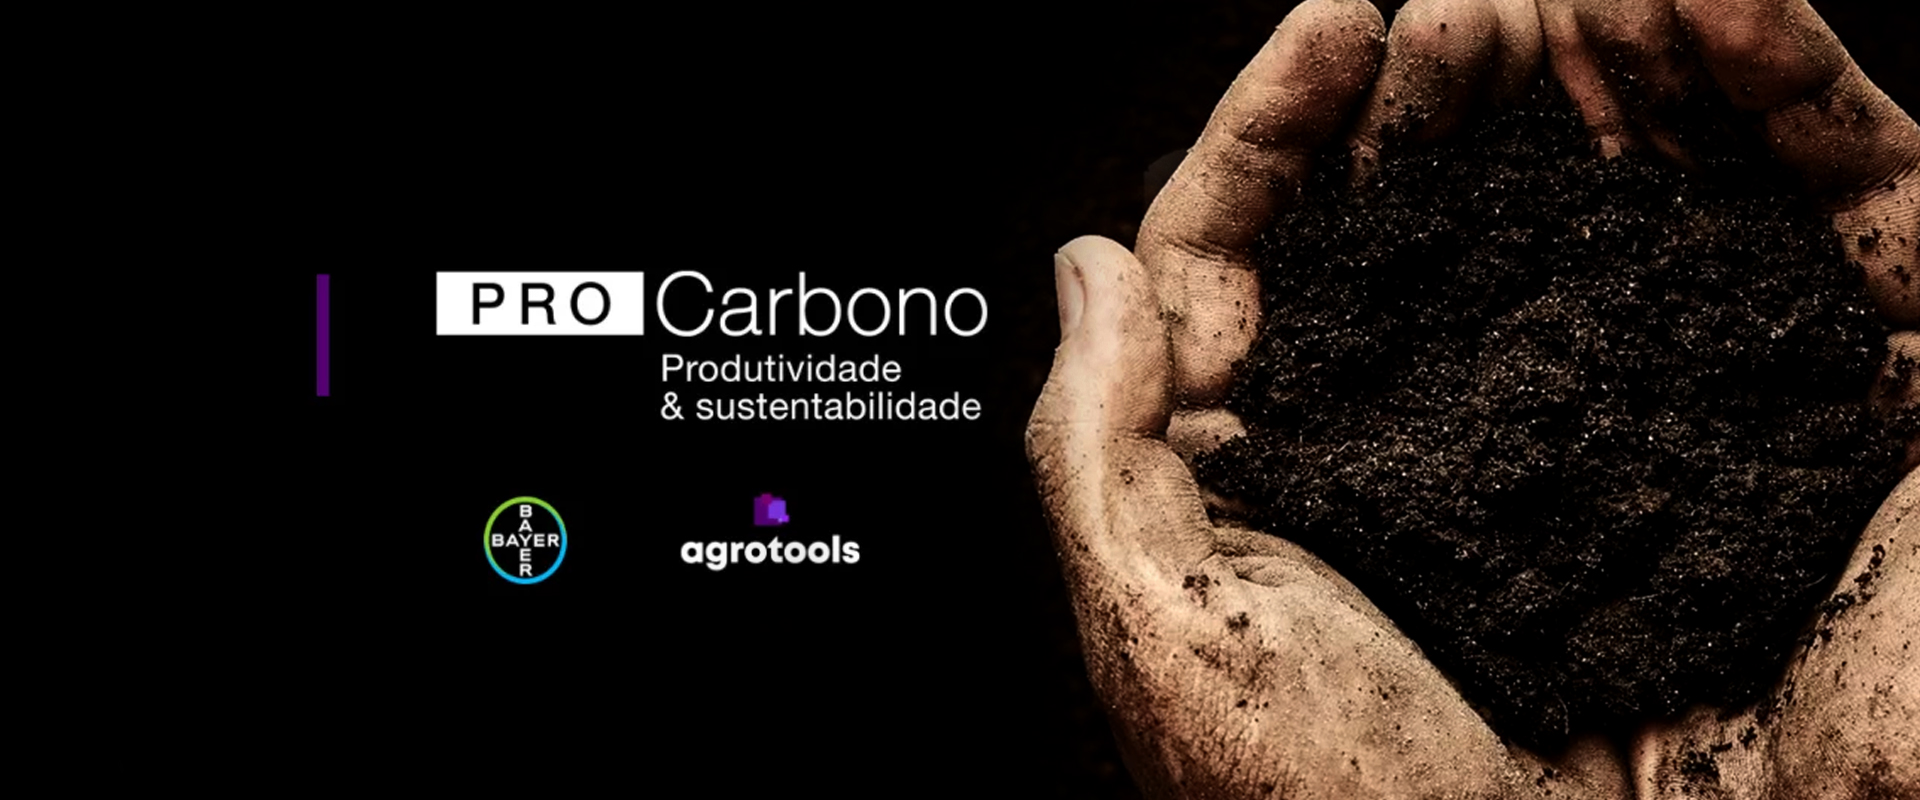 Pro Carbono